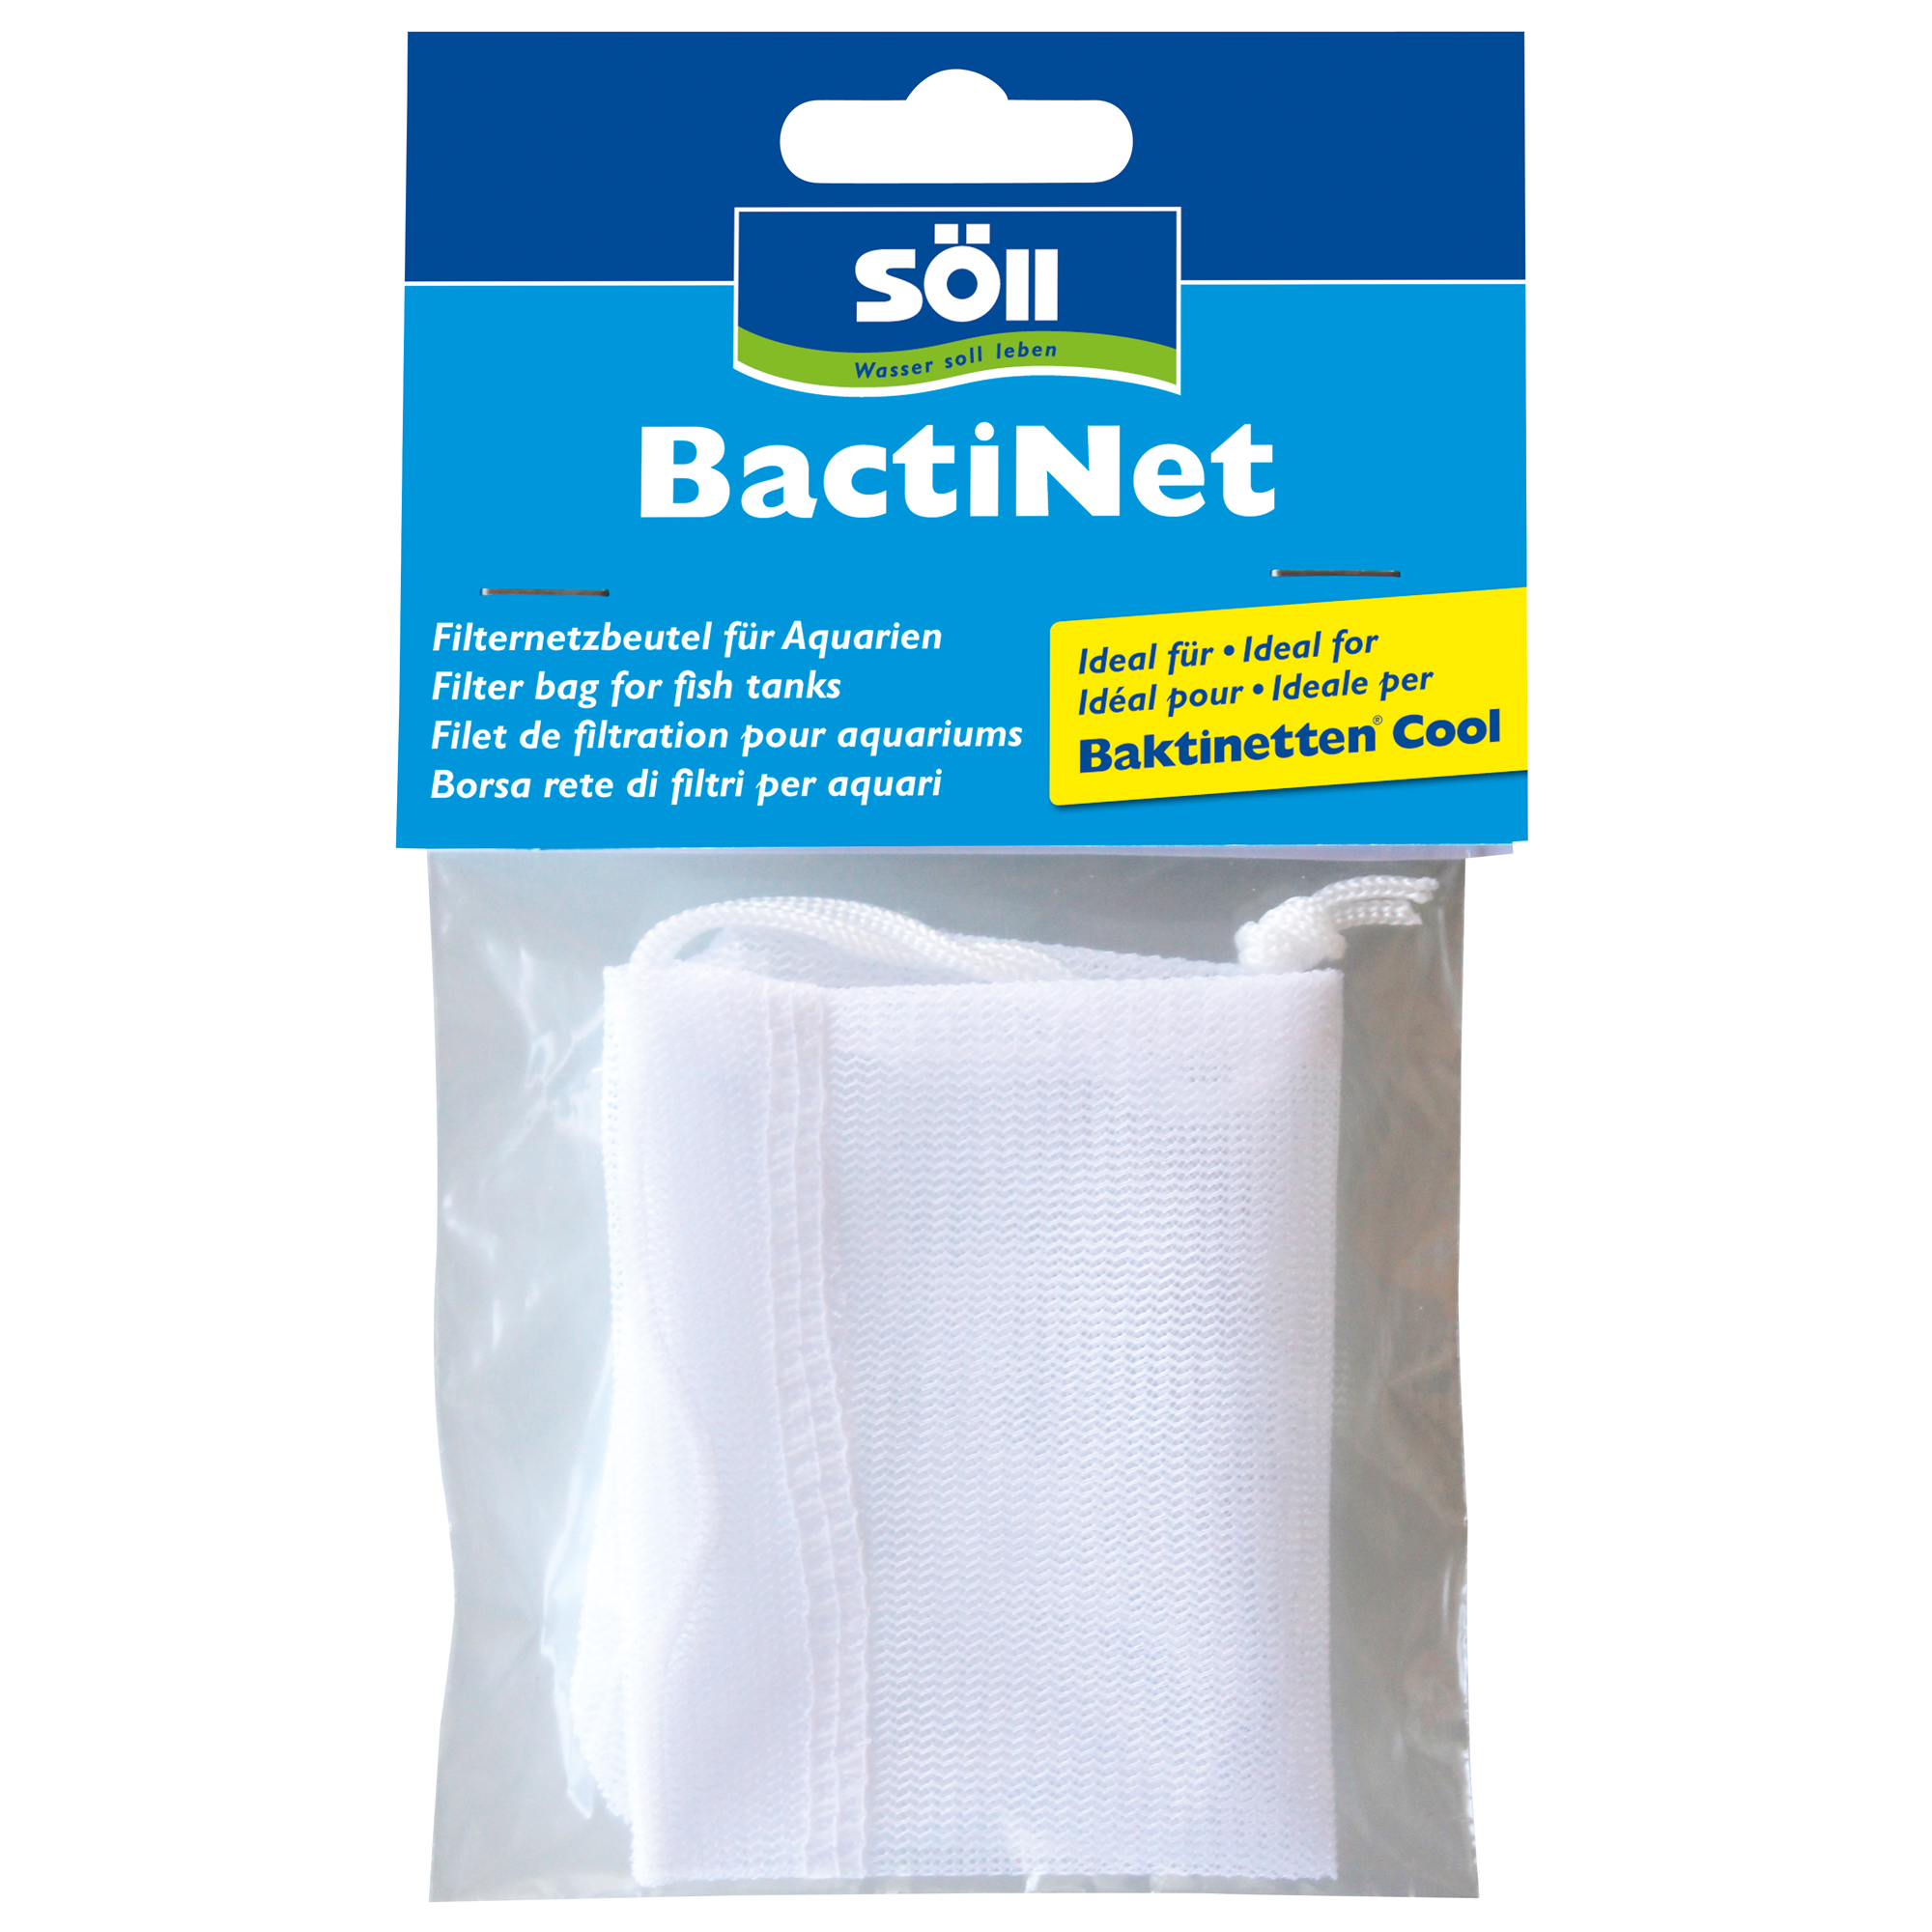 BactiNet 9 x 13 cm, 1 Stück + product picture